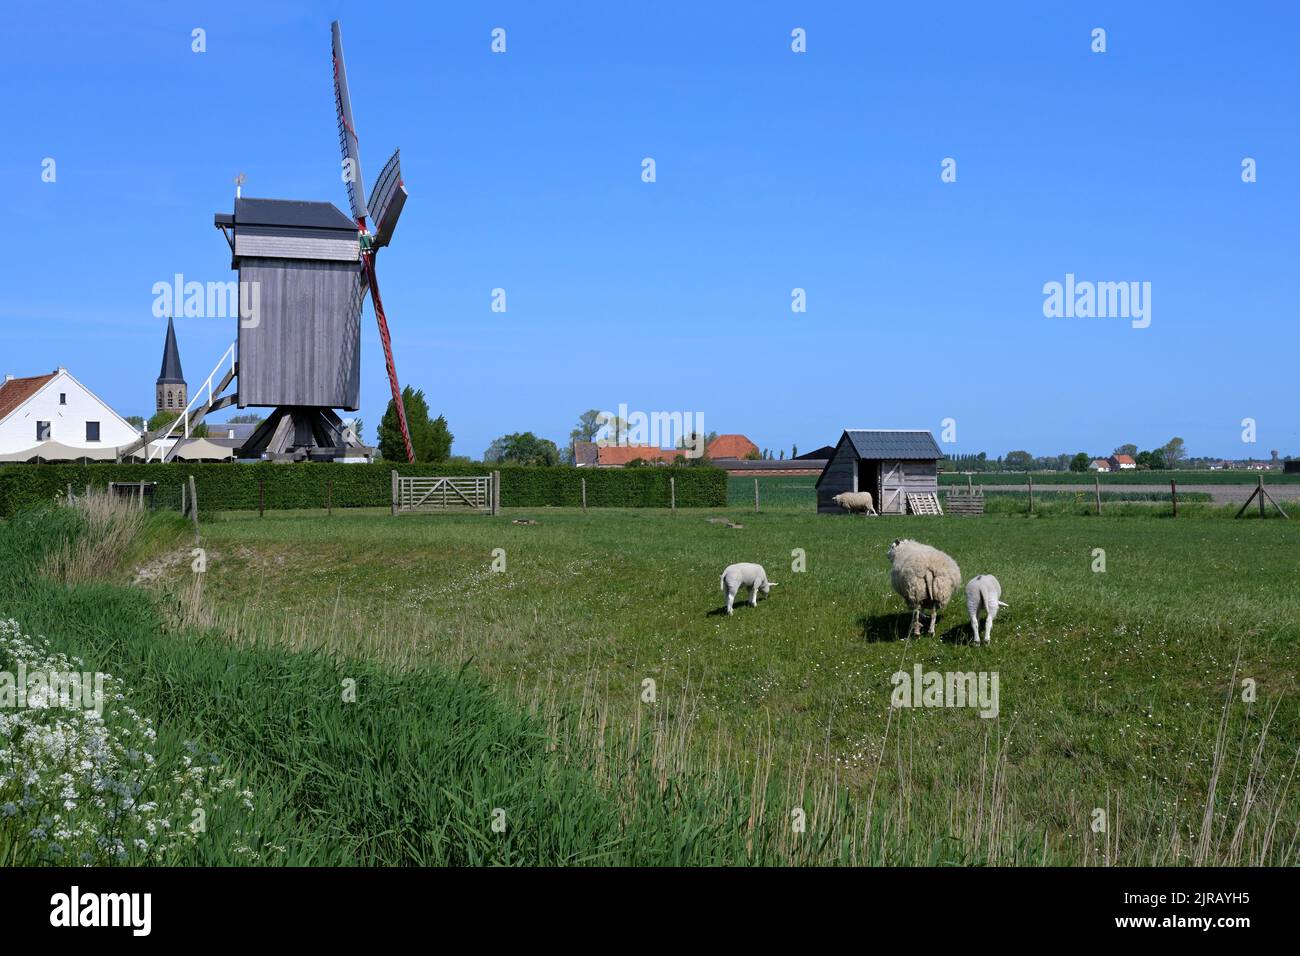 Sheep grazing in the polder in front of the windmill Geersensmolen, Klemskerke, Ostende, Belgium Stock Photo